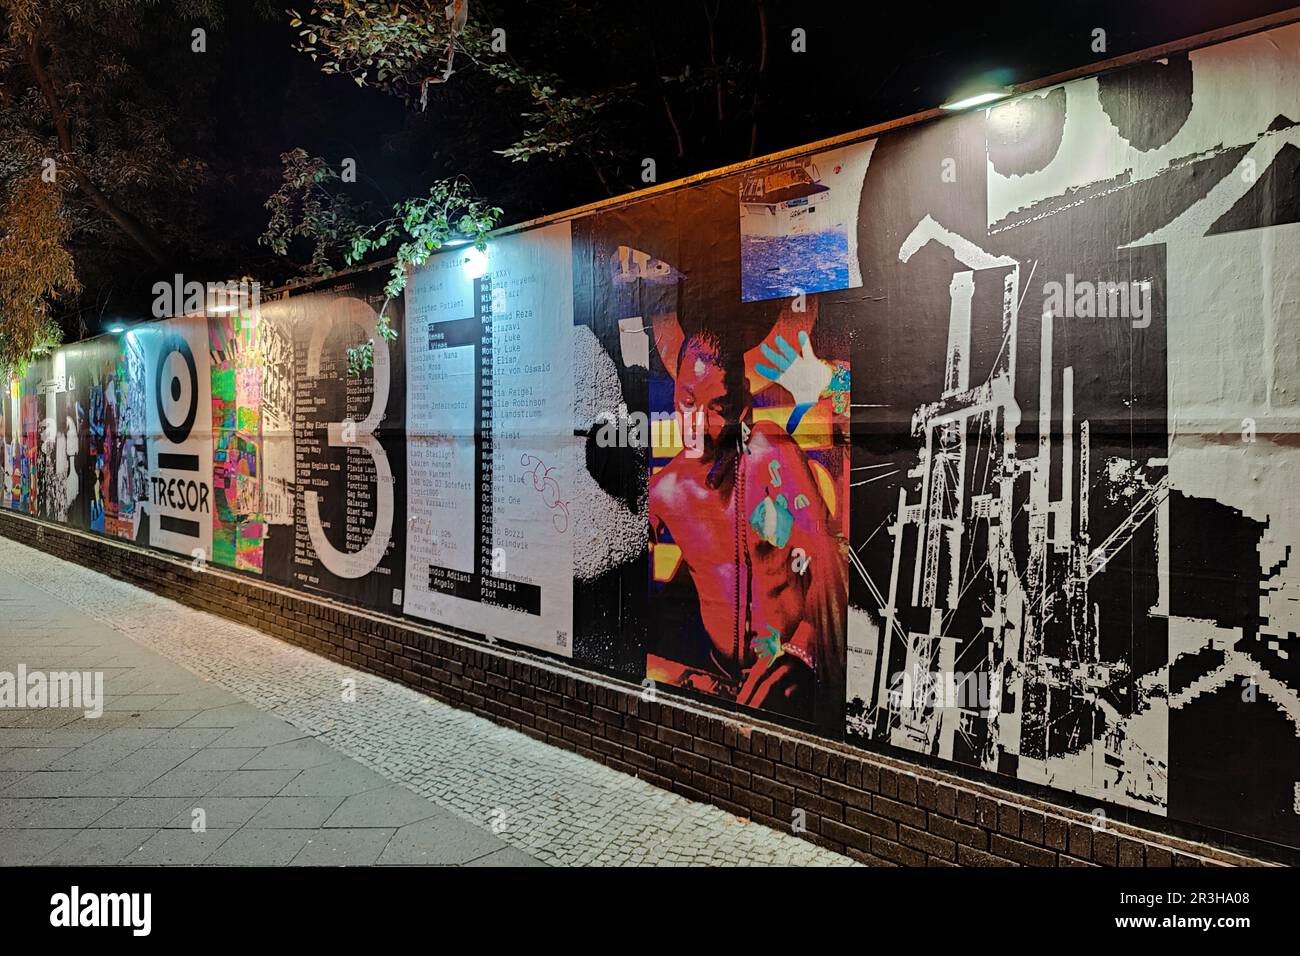 Illuminated wall at Tresor techno club at night, Koepenicker Strasse, Berlin, Germany, Europe Stock Photo